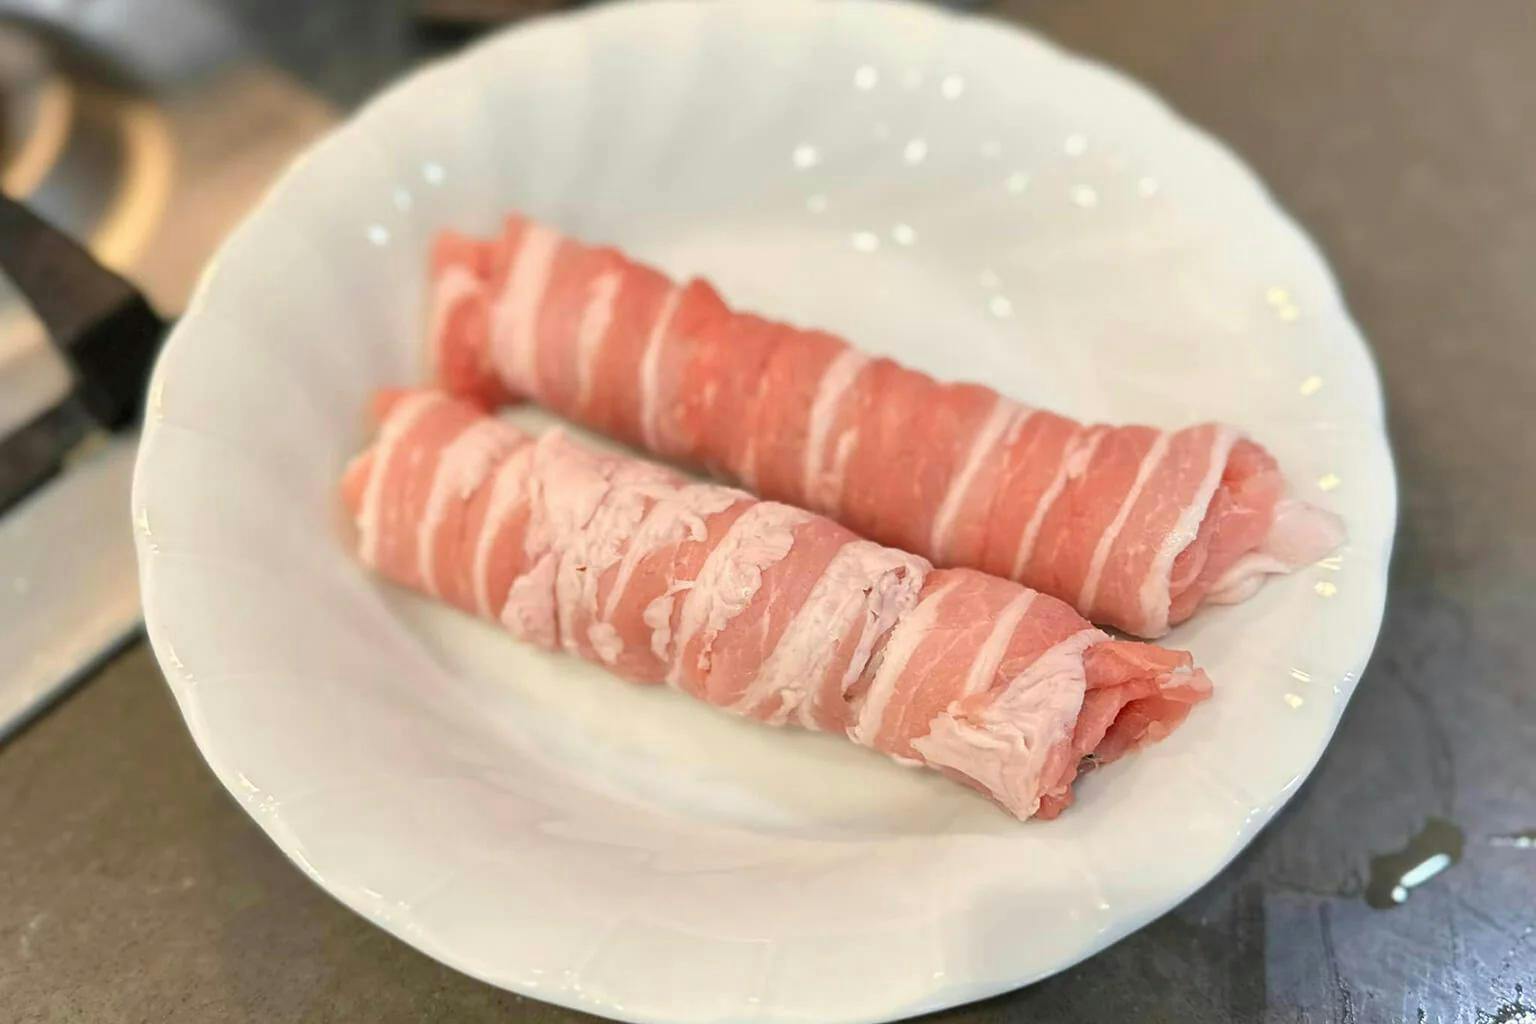 Roll vegetables with pork belly, and sprinkle katakuriko